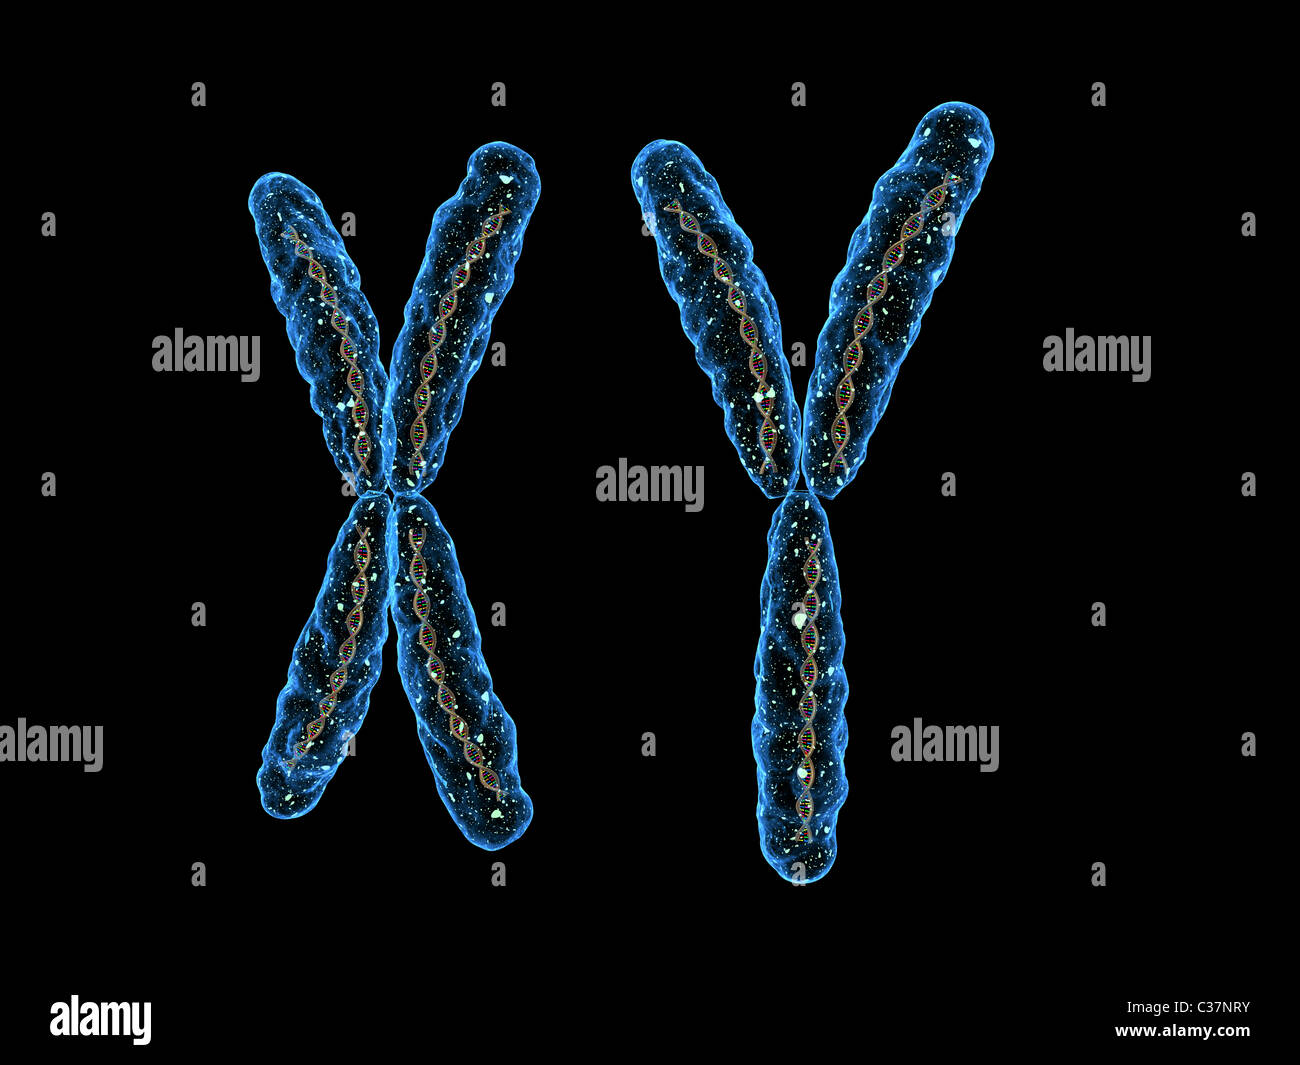 x - chromosome, y - chromosome Stock Photo